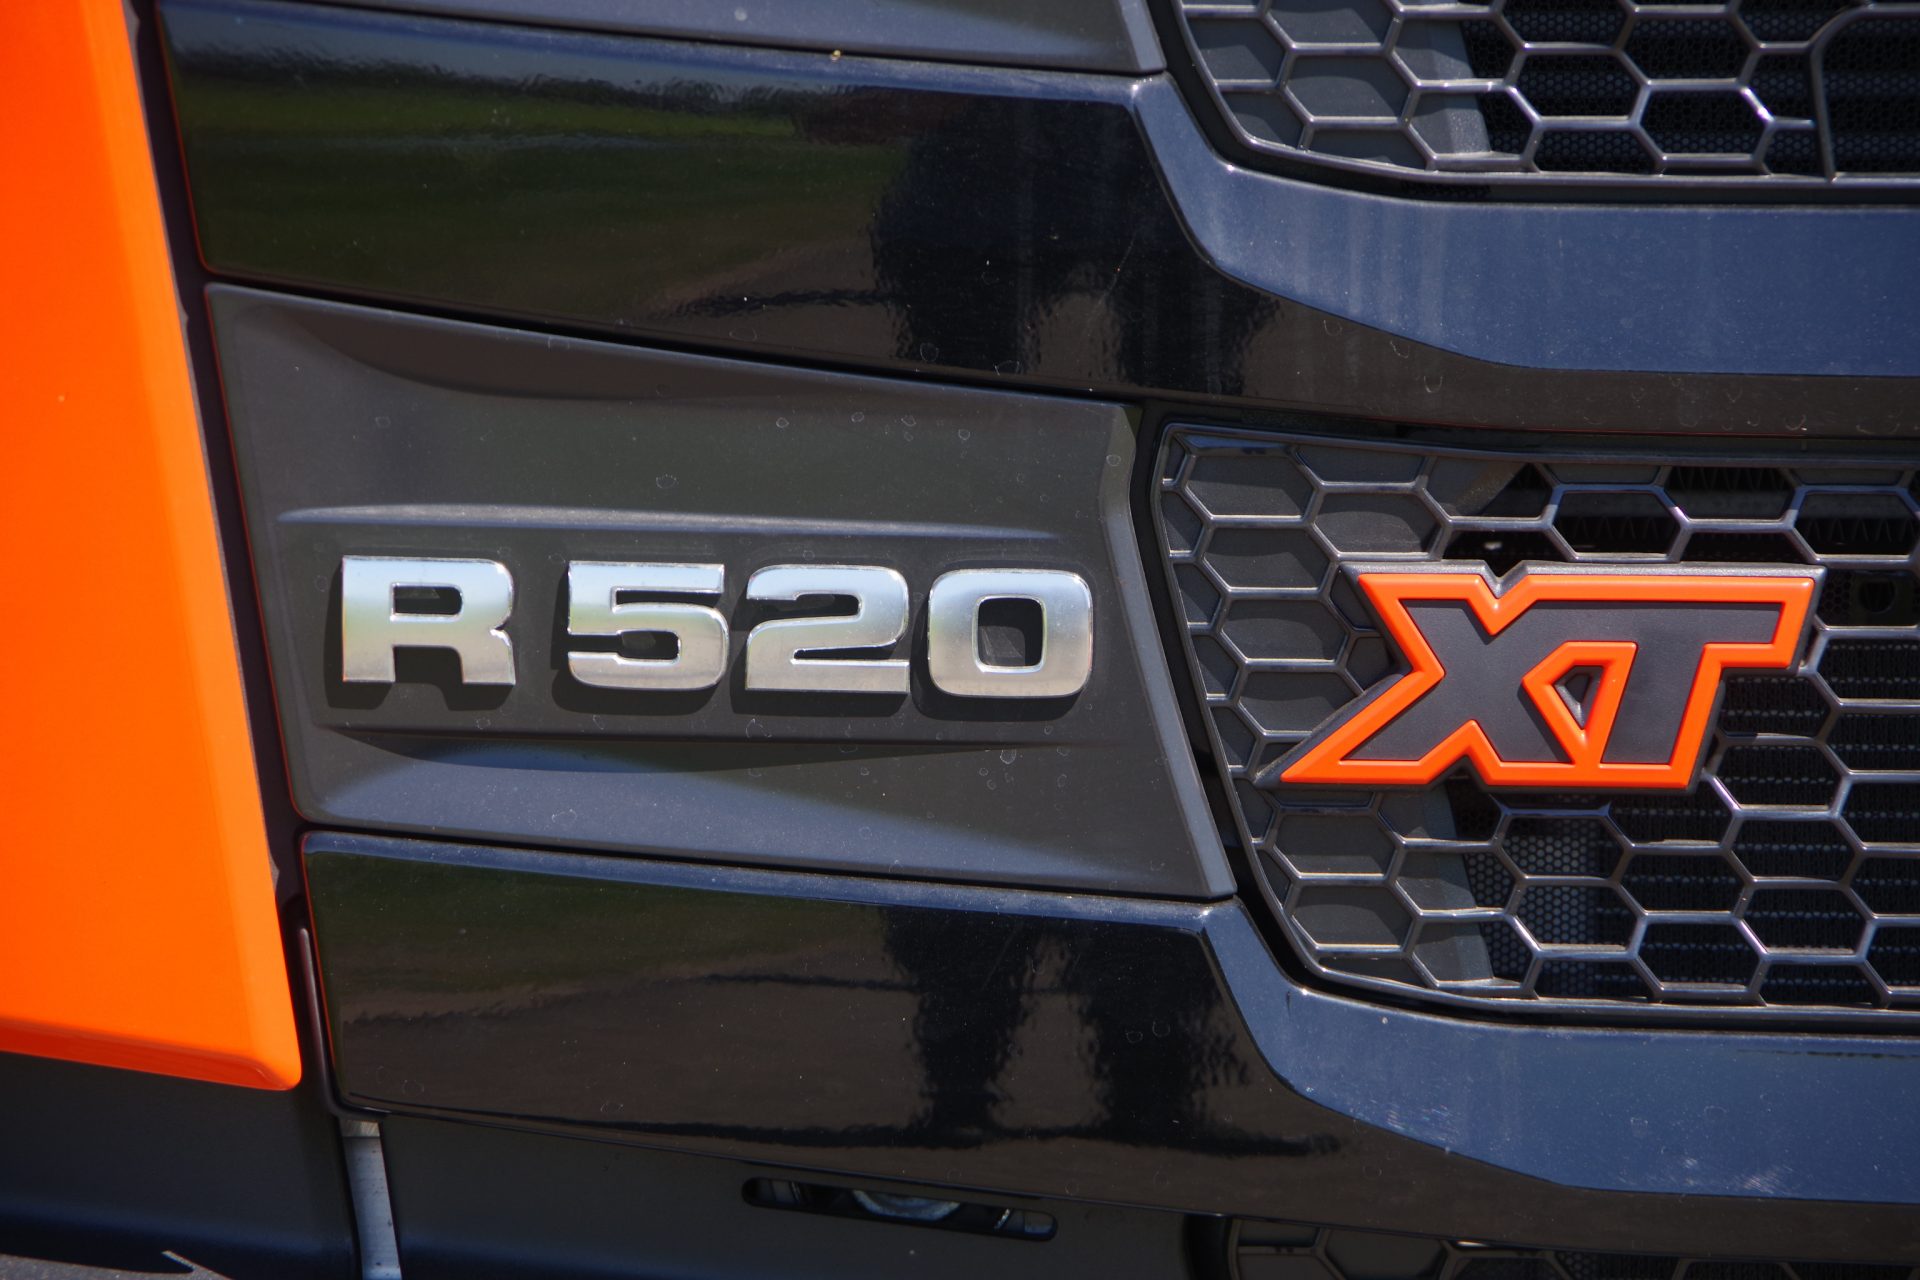 R 520 XT logo